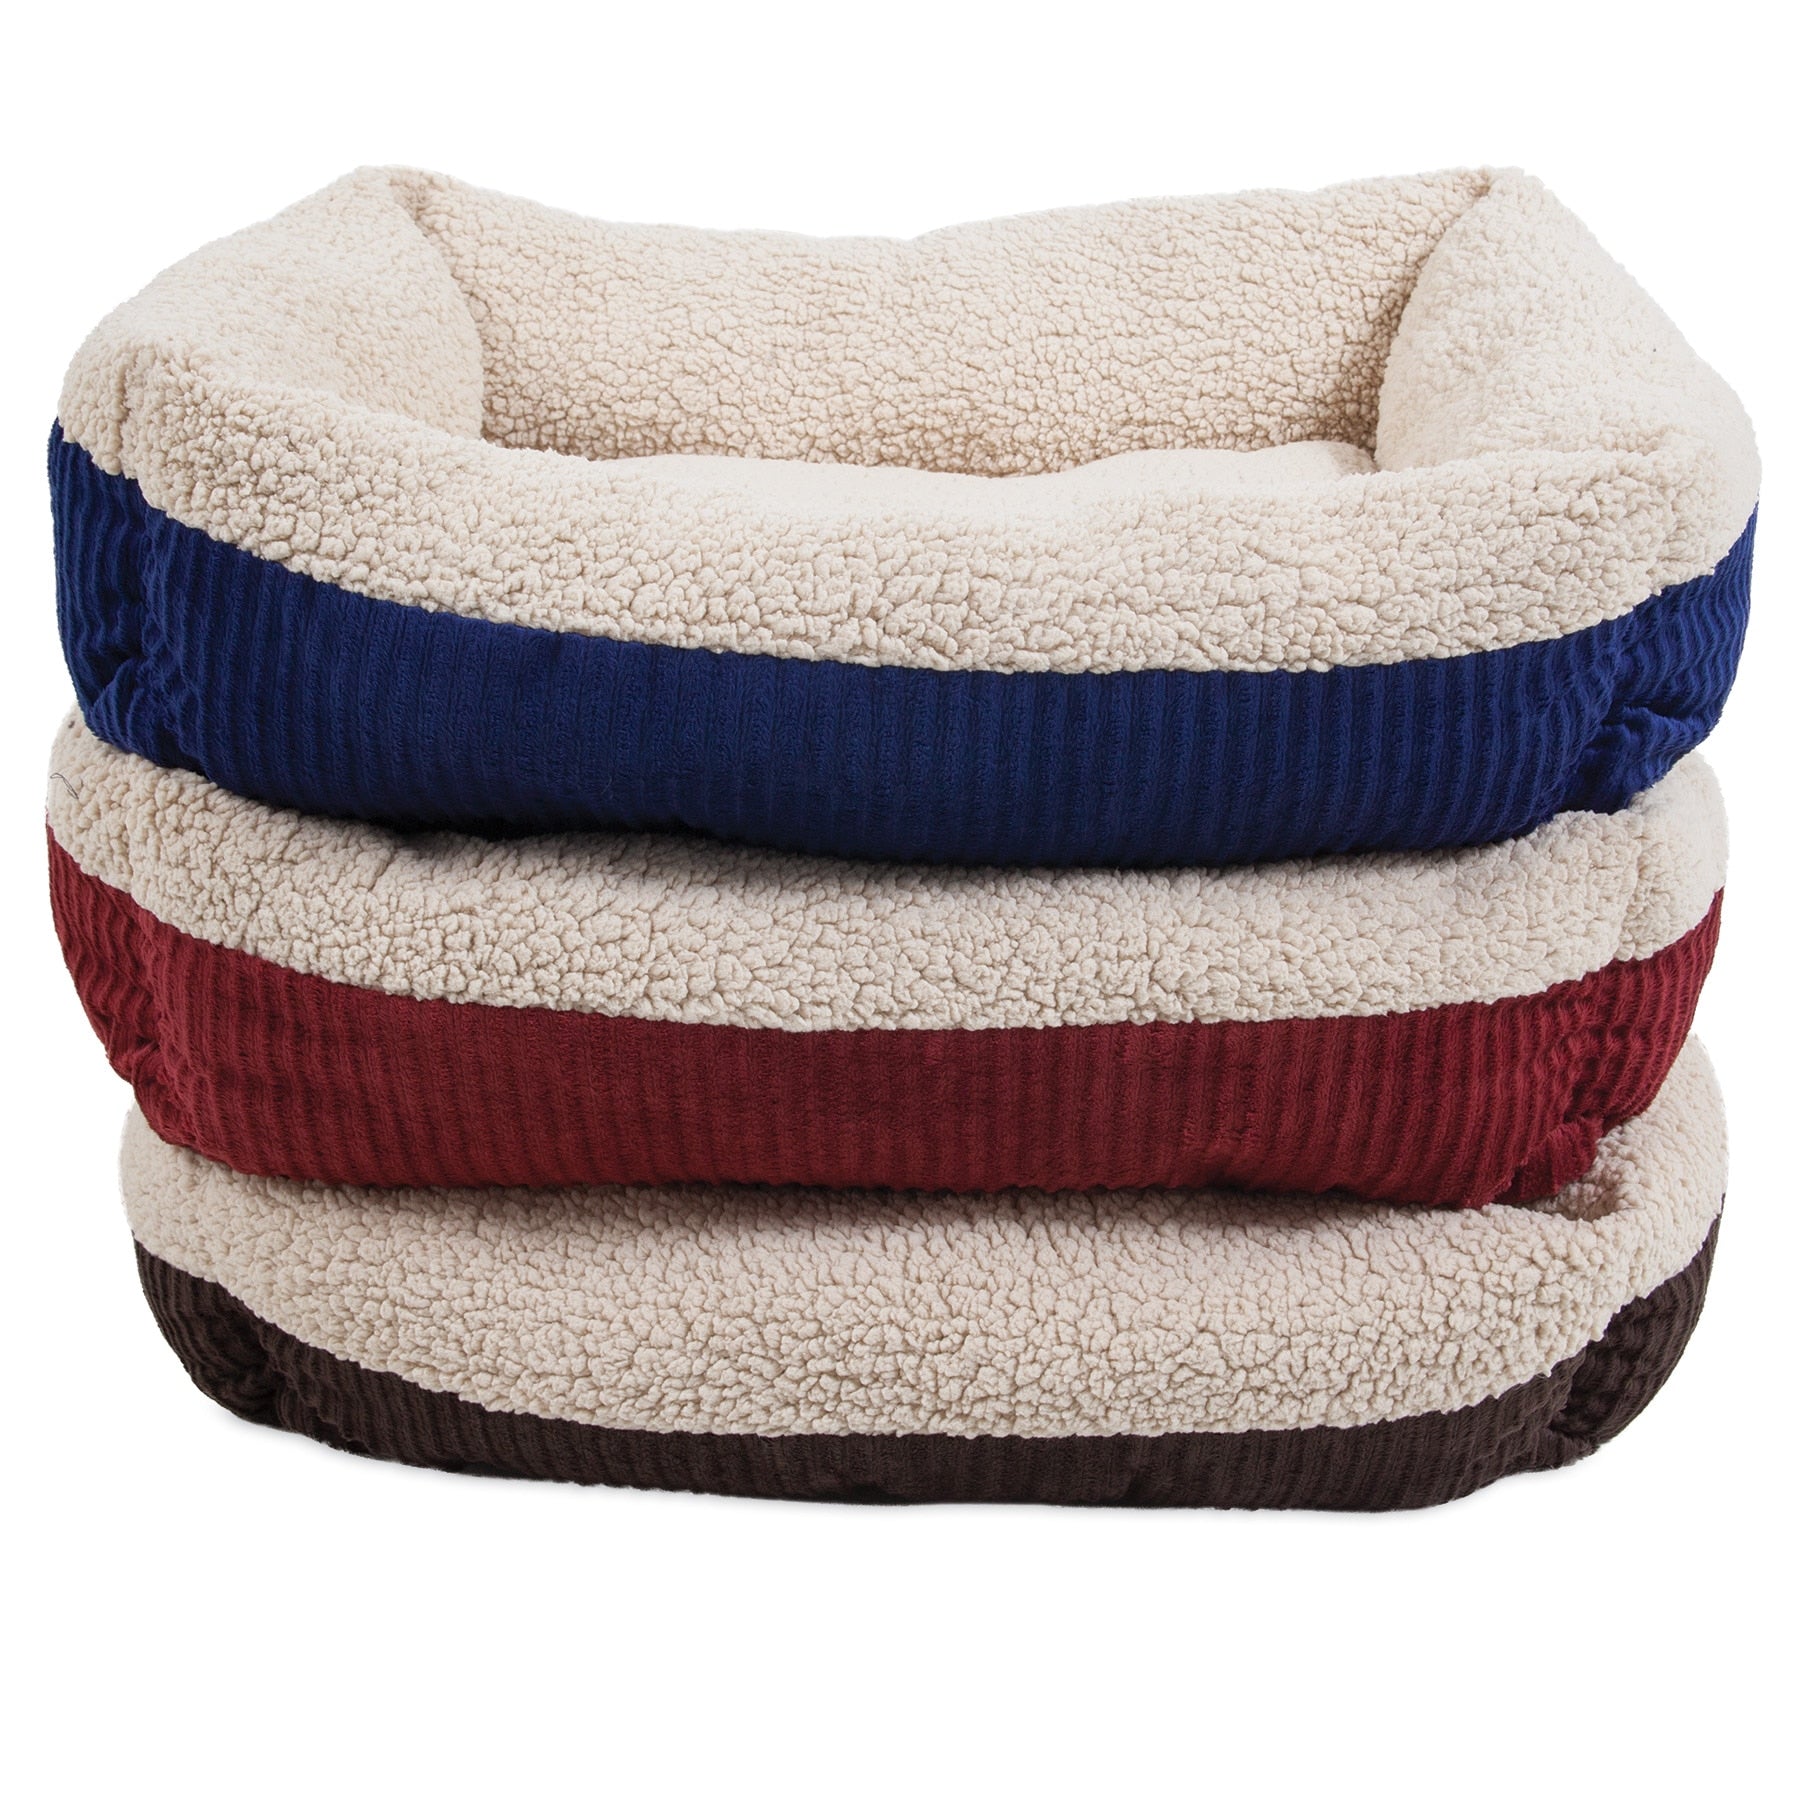 Aspen Pet Self-Warming Dog Bed